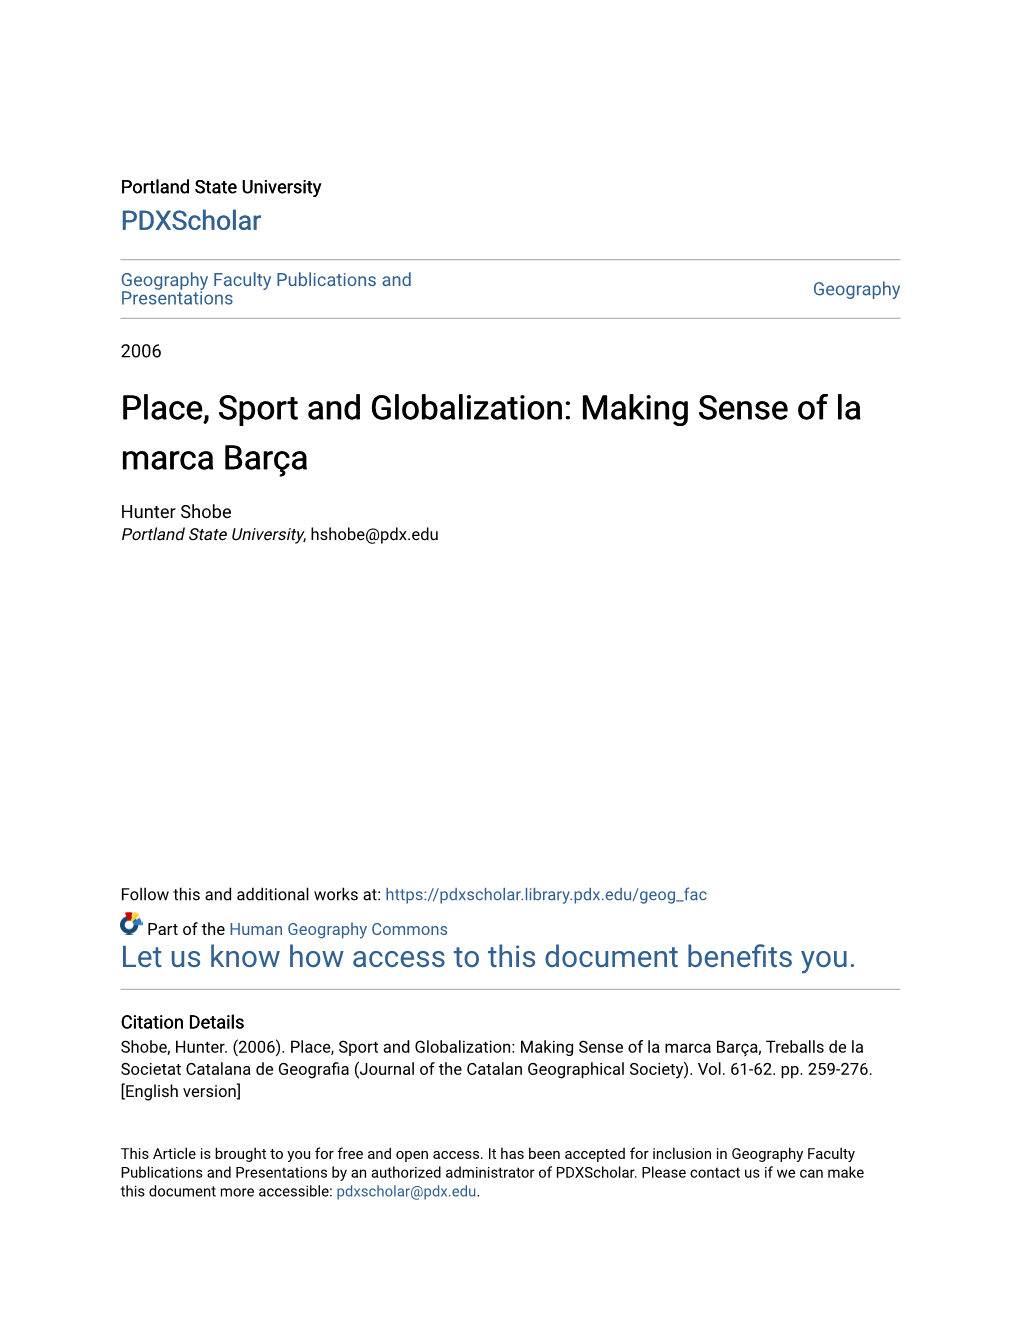 Place, Sport and Globalization: Making Sense of La Marca Barça